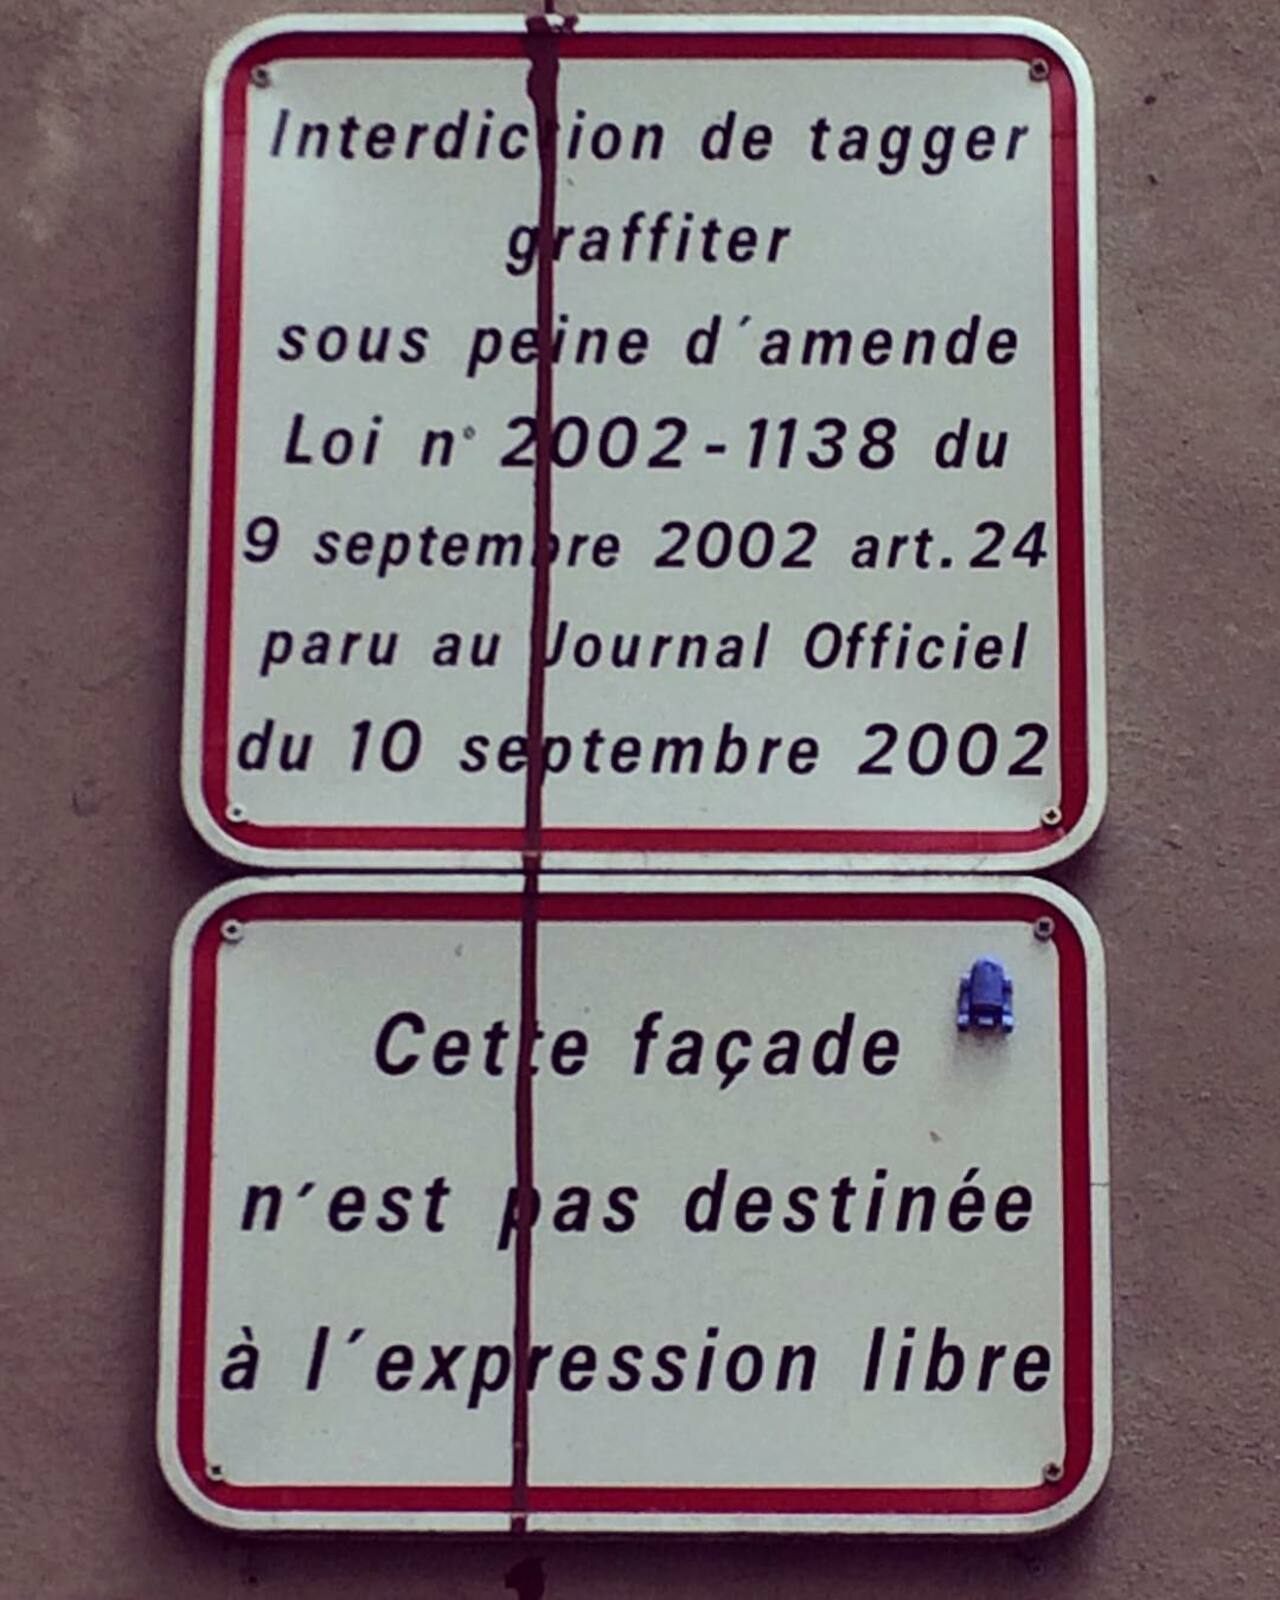 #Paris #graffiti photo by @elricoelmagnifico http://ift.tt/1VQeQmV #StreetArt http://t.co/2RAuD7FmaD